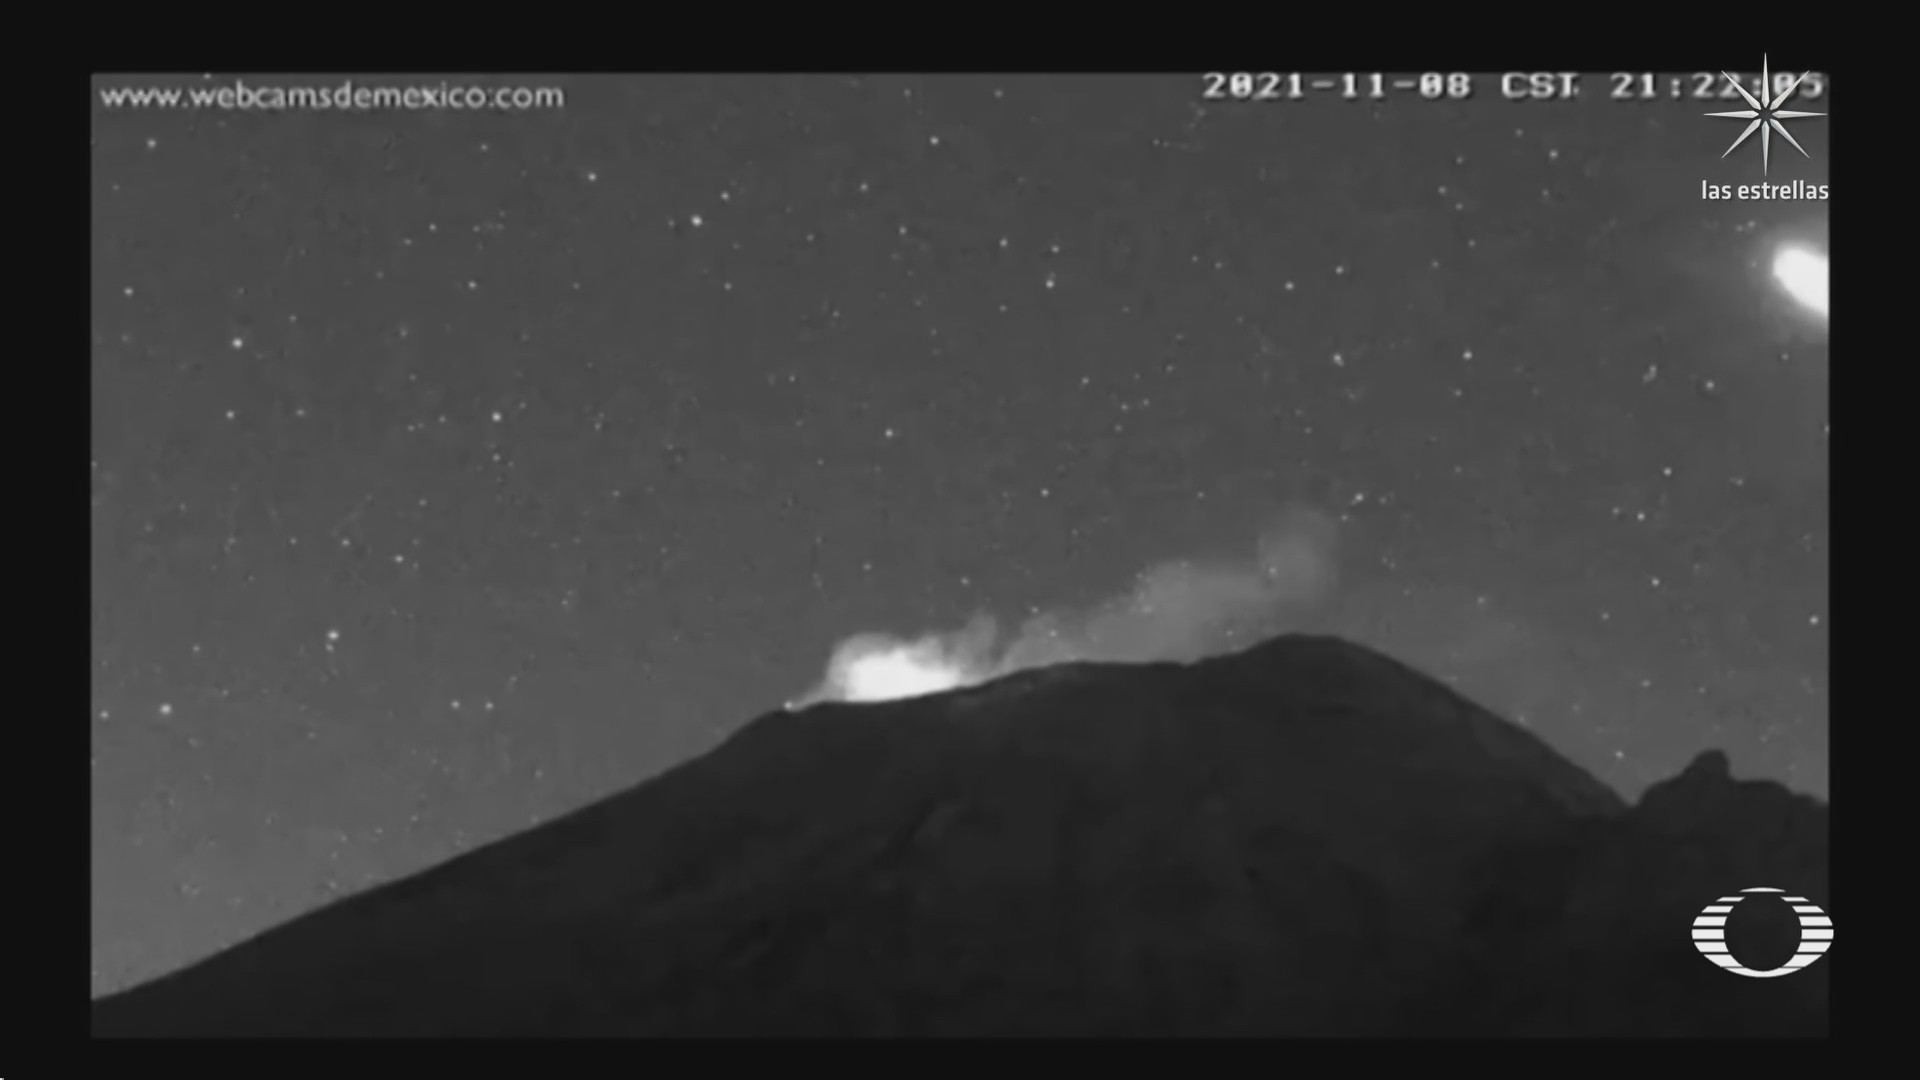 capsula dragon pasa cerca del volcan popocatepetl